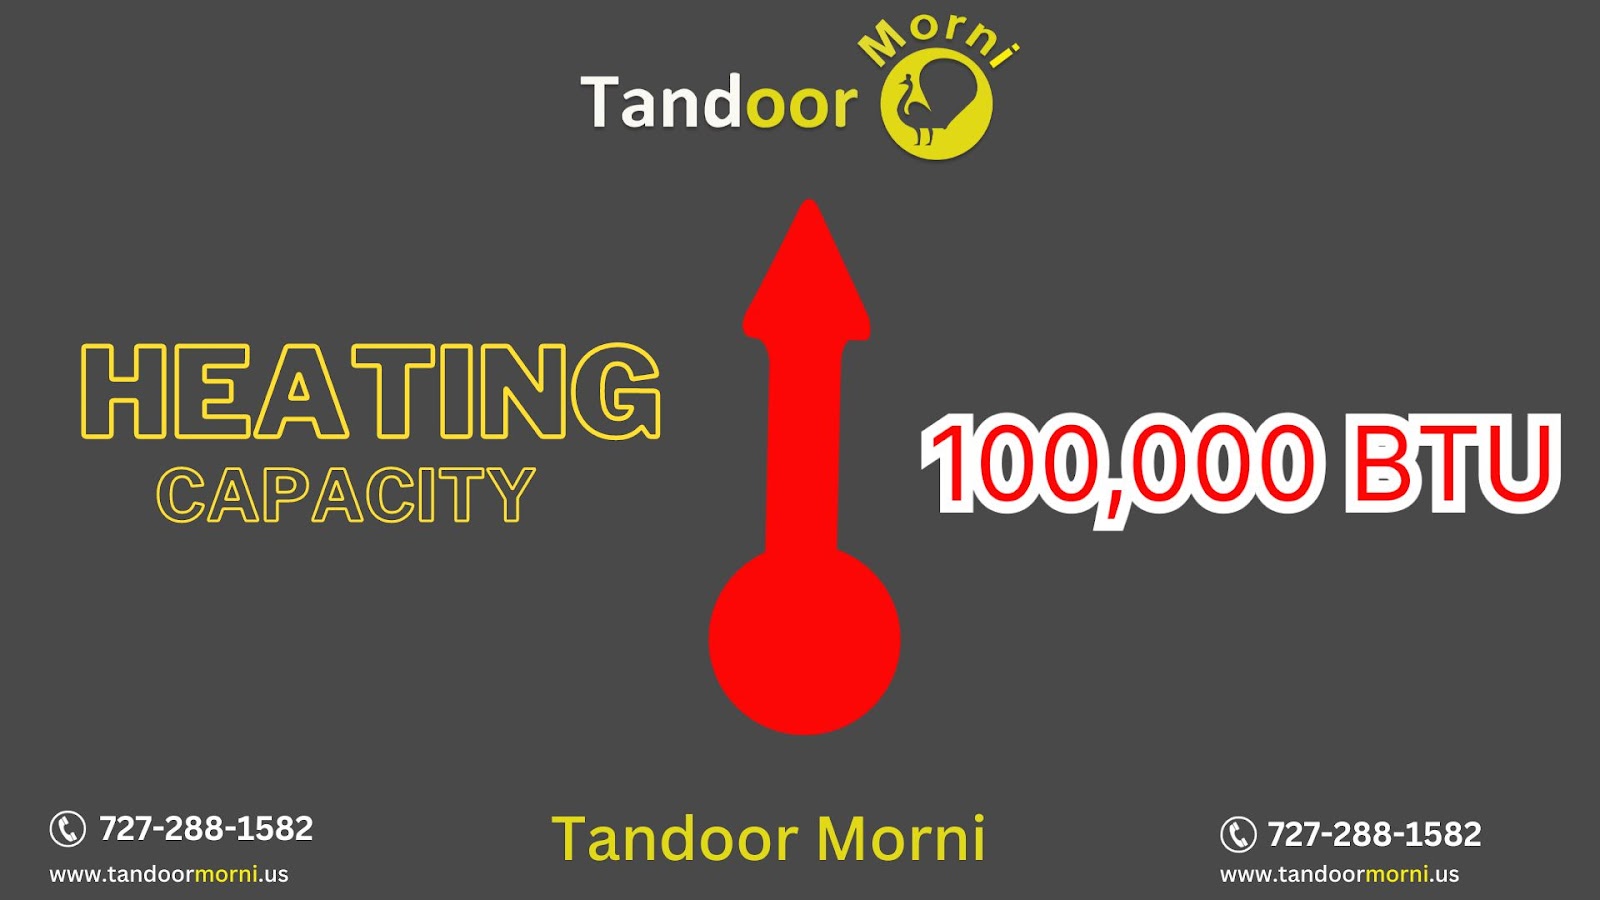 The heating capacity of both tandoors is 100,000 BTU.